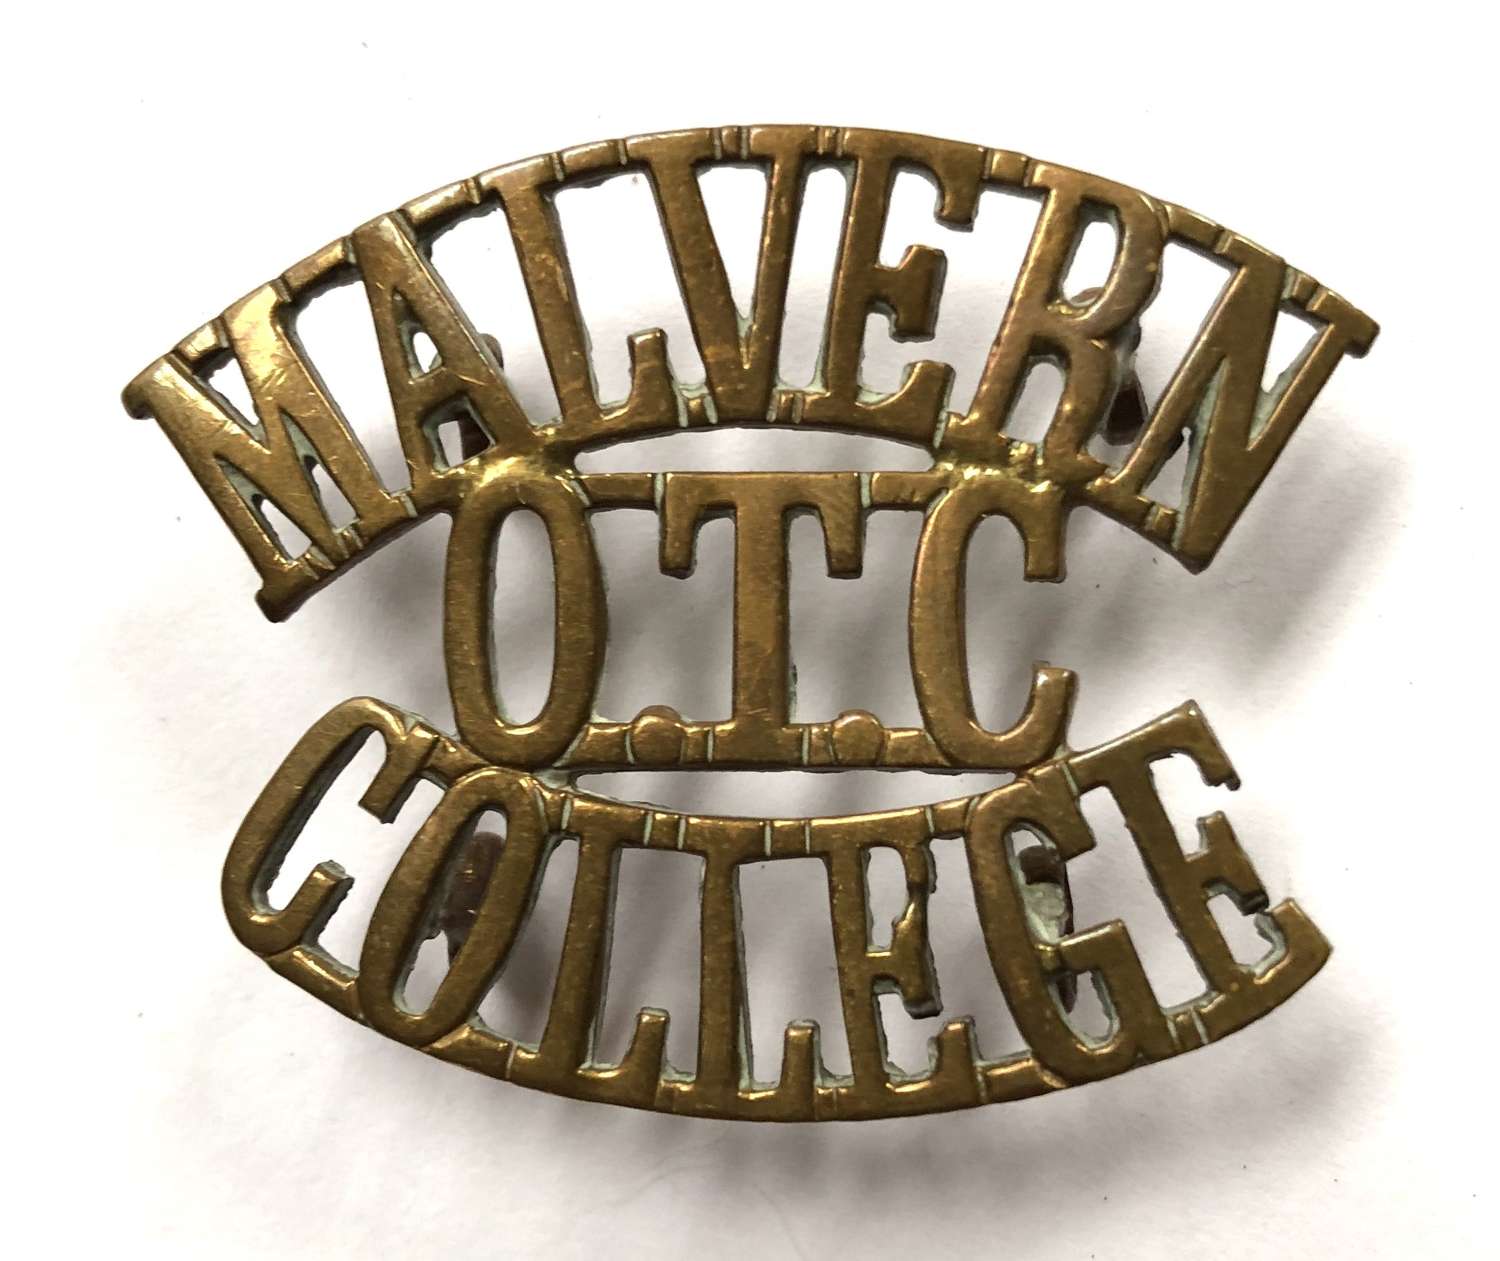 MALVERN / OTC / COLLEGE shoulder title circa 1908-40